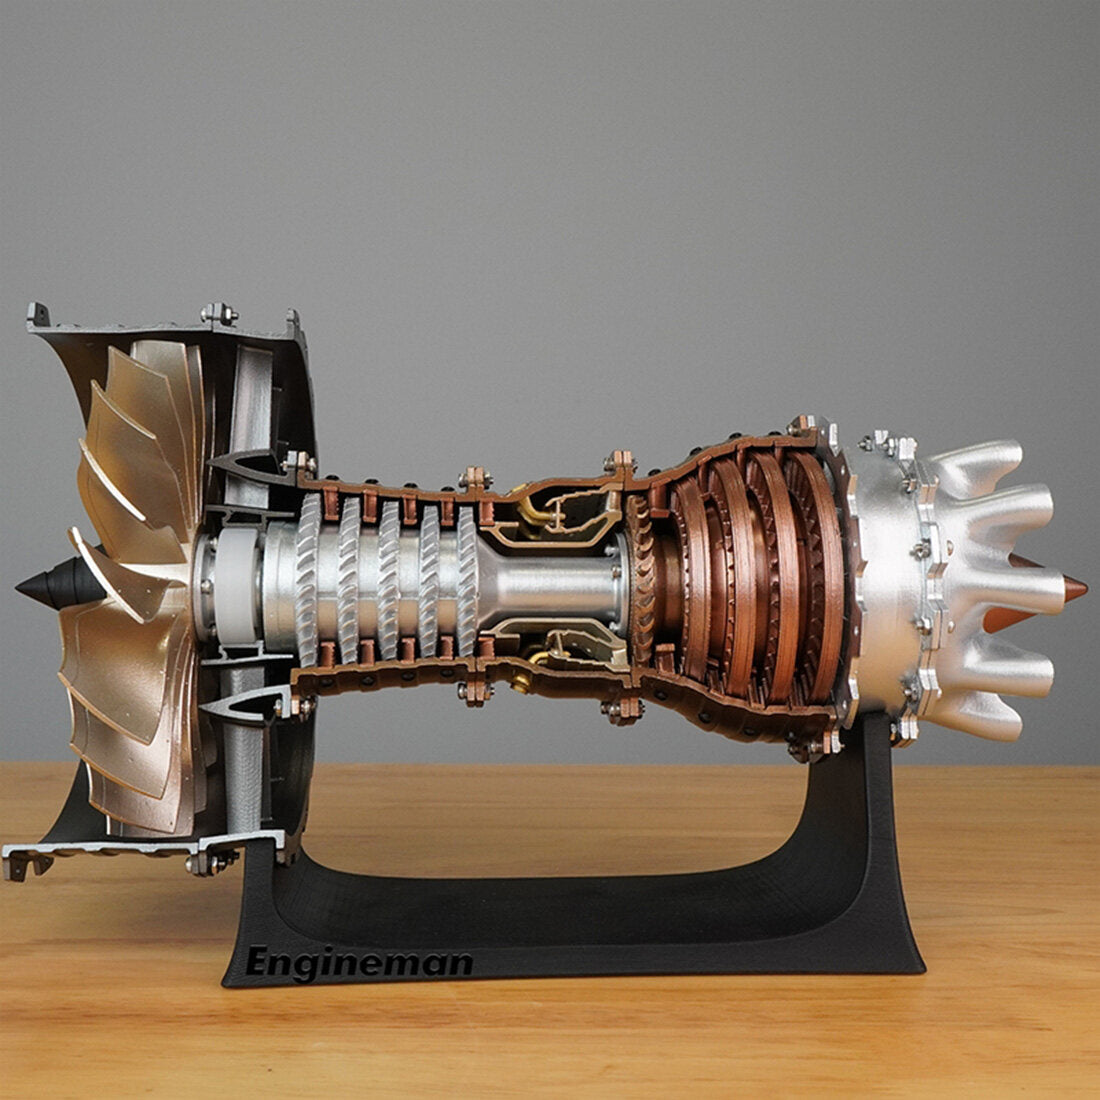 Trent 900 Aircraft Engine Model Kit -1: 20 Scale- Assemble Your Own Jet Engine enginediyshop